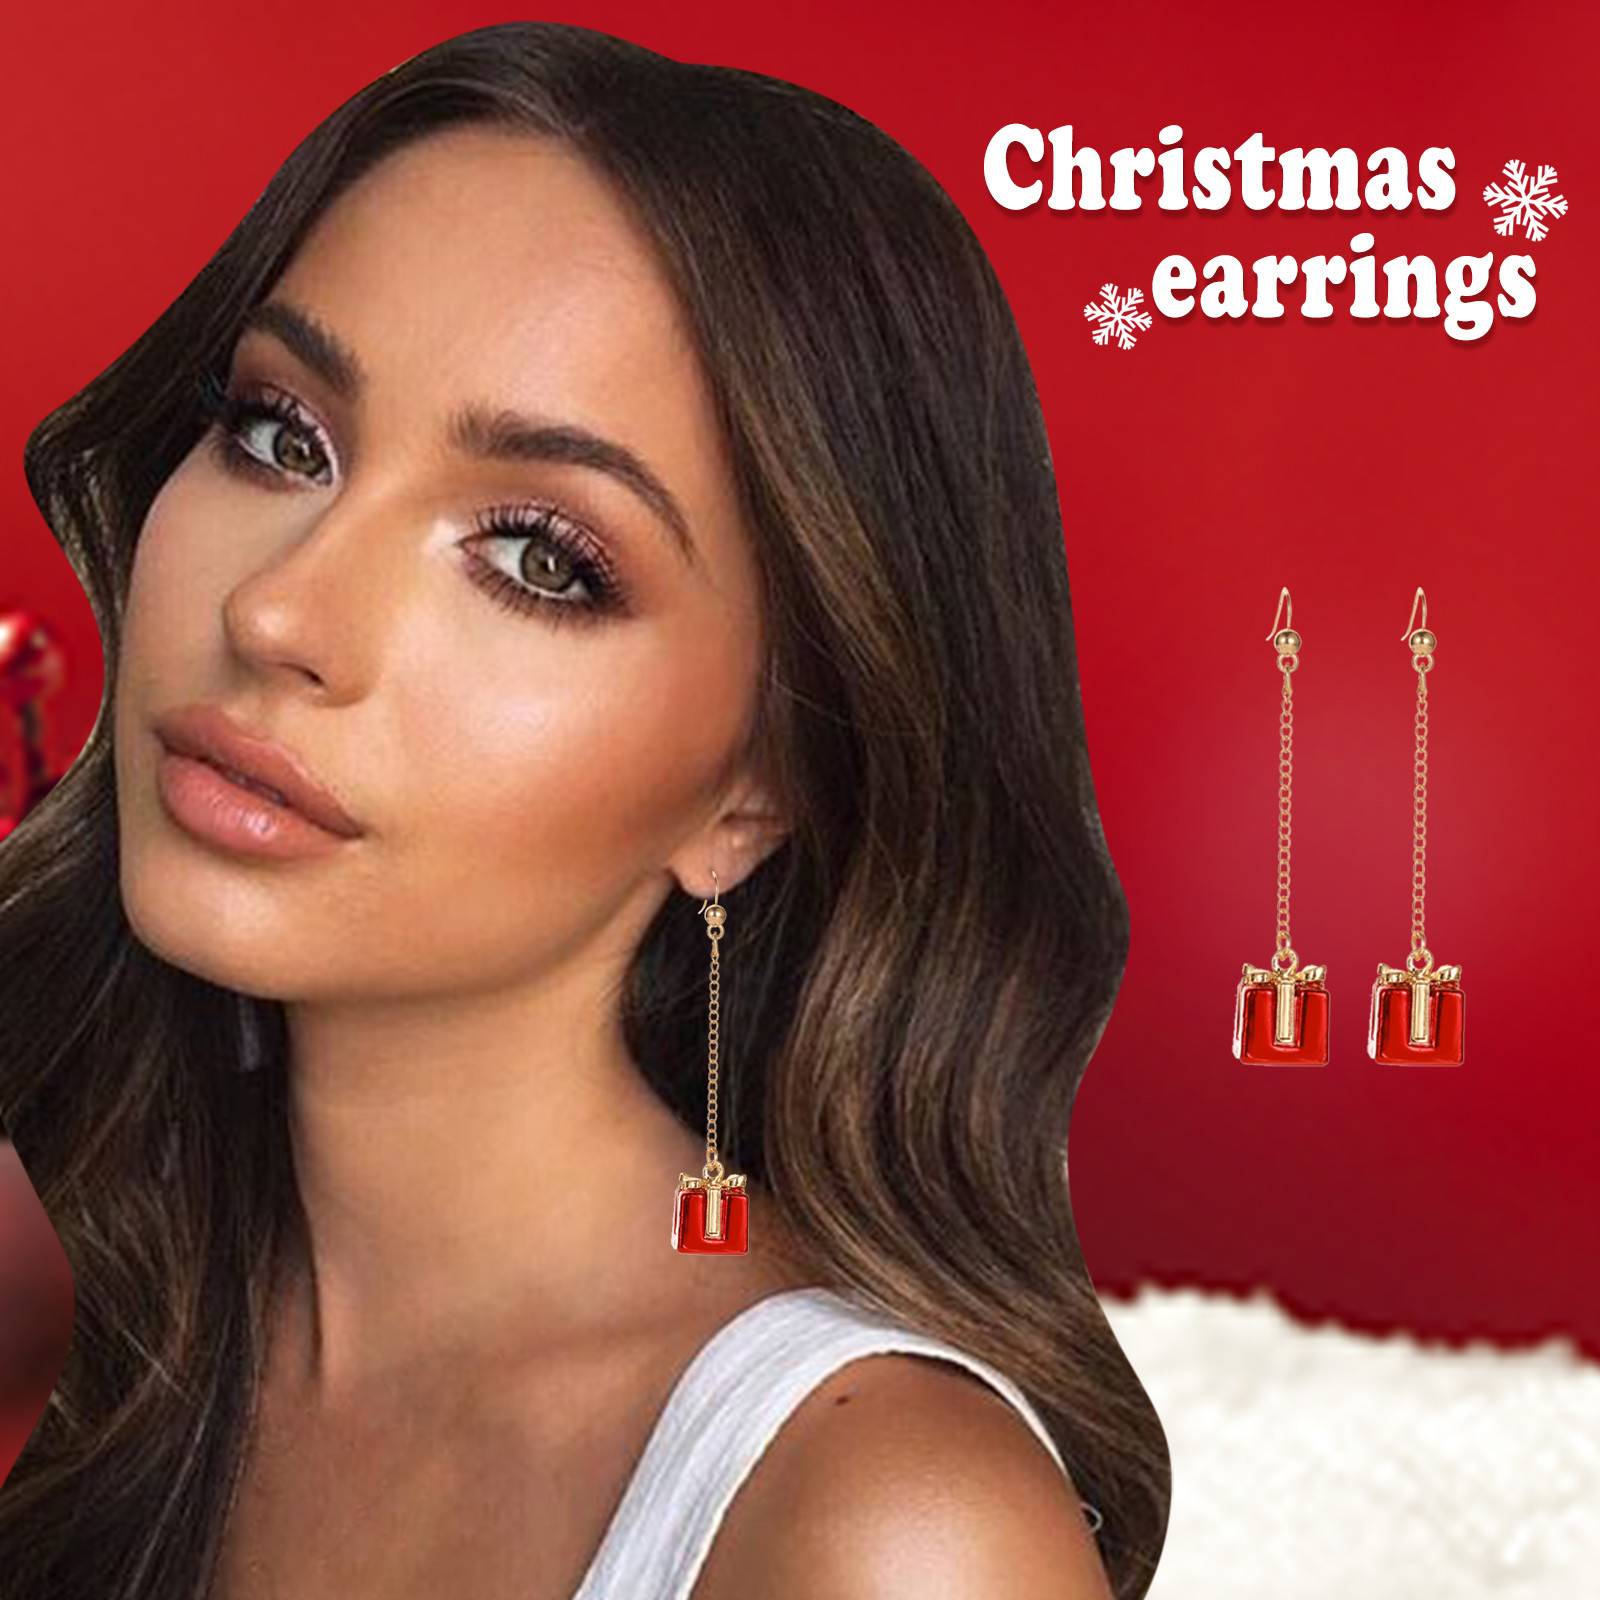 Kayannuo Christmas Clearance Women Fashion Earrings Christmas Earrings Cute Festive Jewelry Ear Wrap Christmas Gifts For Women - image 1 of 4